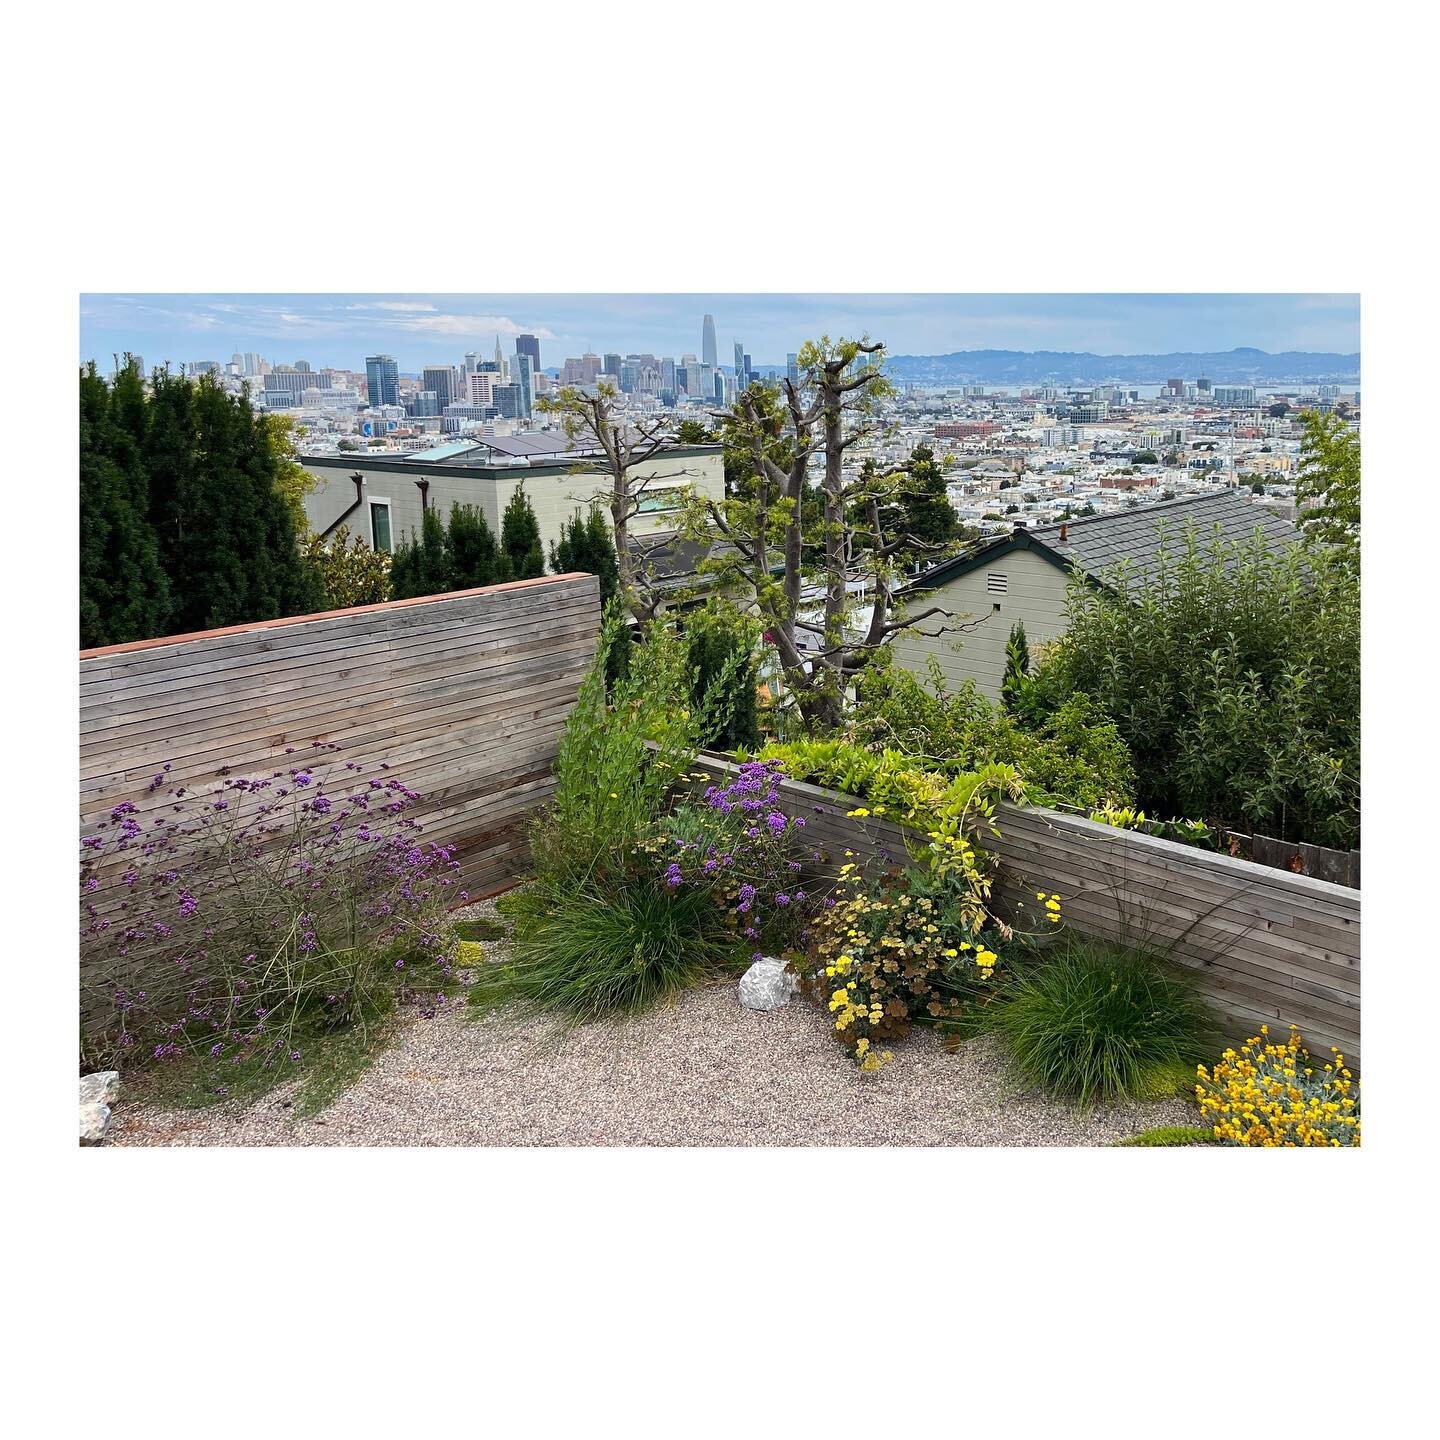 Layers of views. 

#garden #backyard #californiagarden #design #gardendesign #landscapedesign #homedesign #art #landscapearchitecture #droughttolerant #plants #studiomoonya